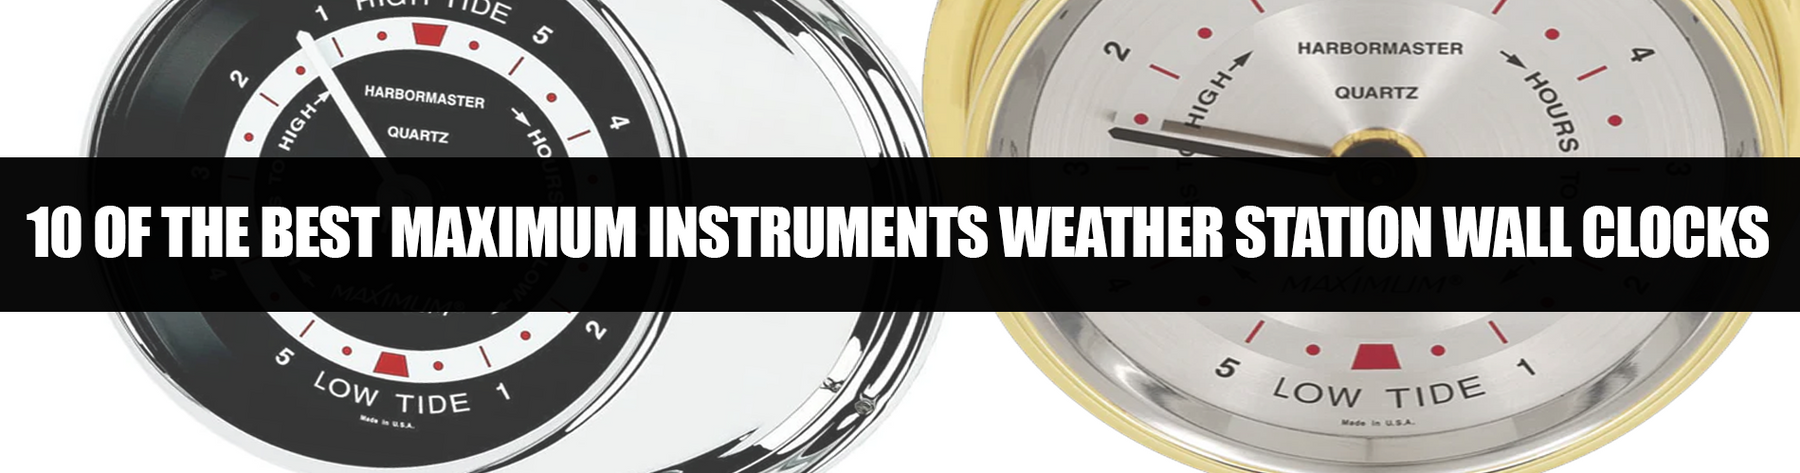 10 Best Maximum Instruments Weather Station Wall Clocks by WeatherScientific.com